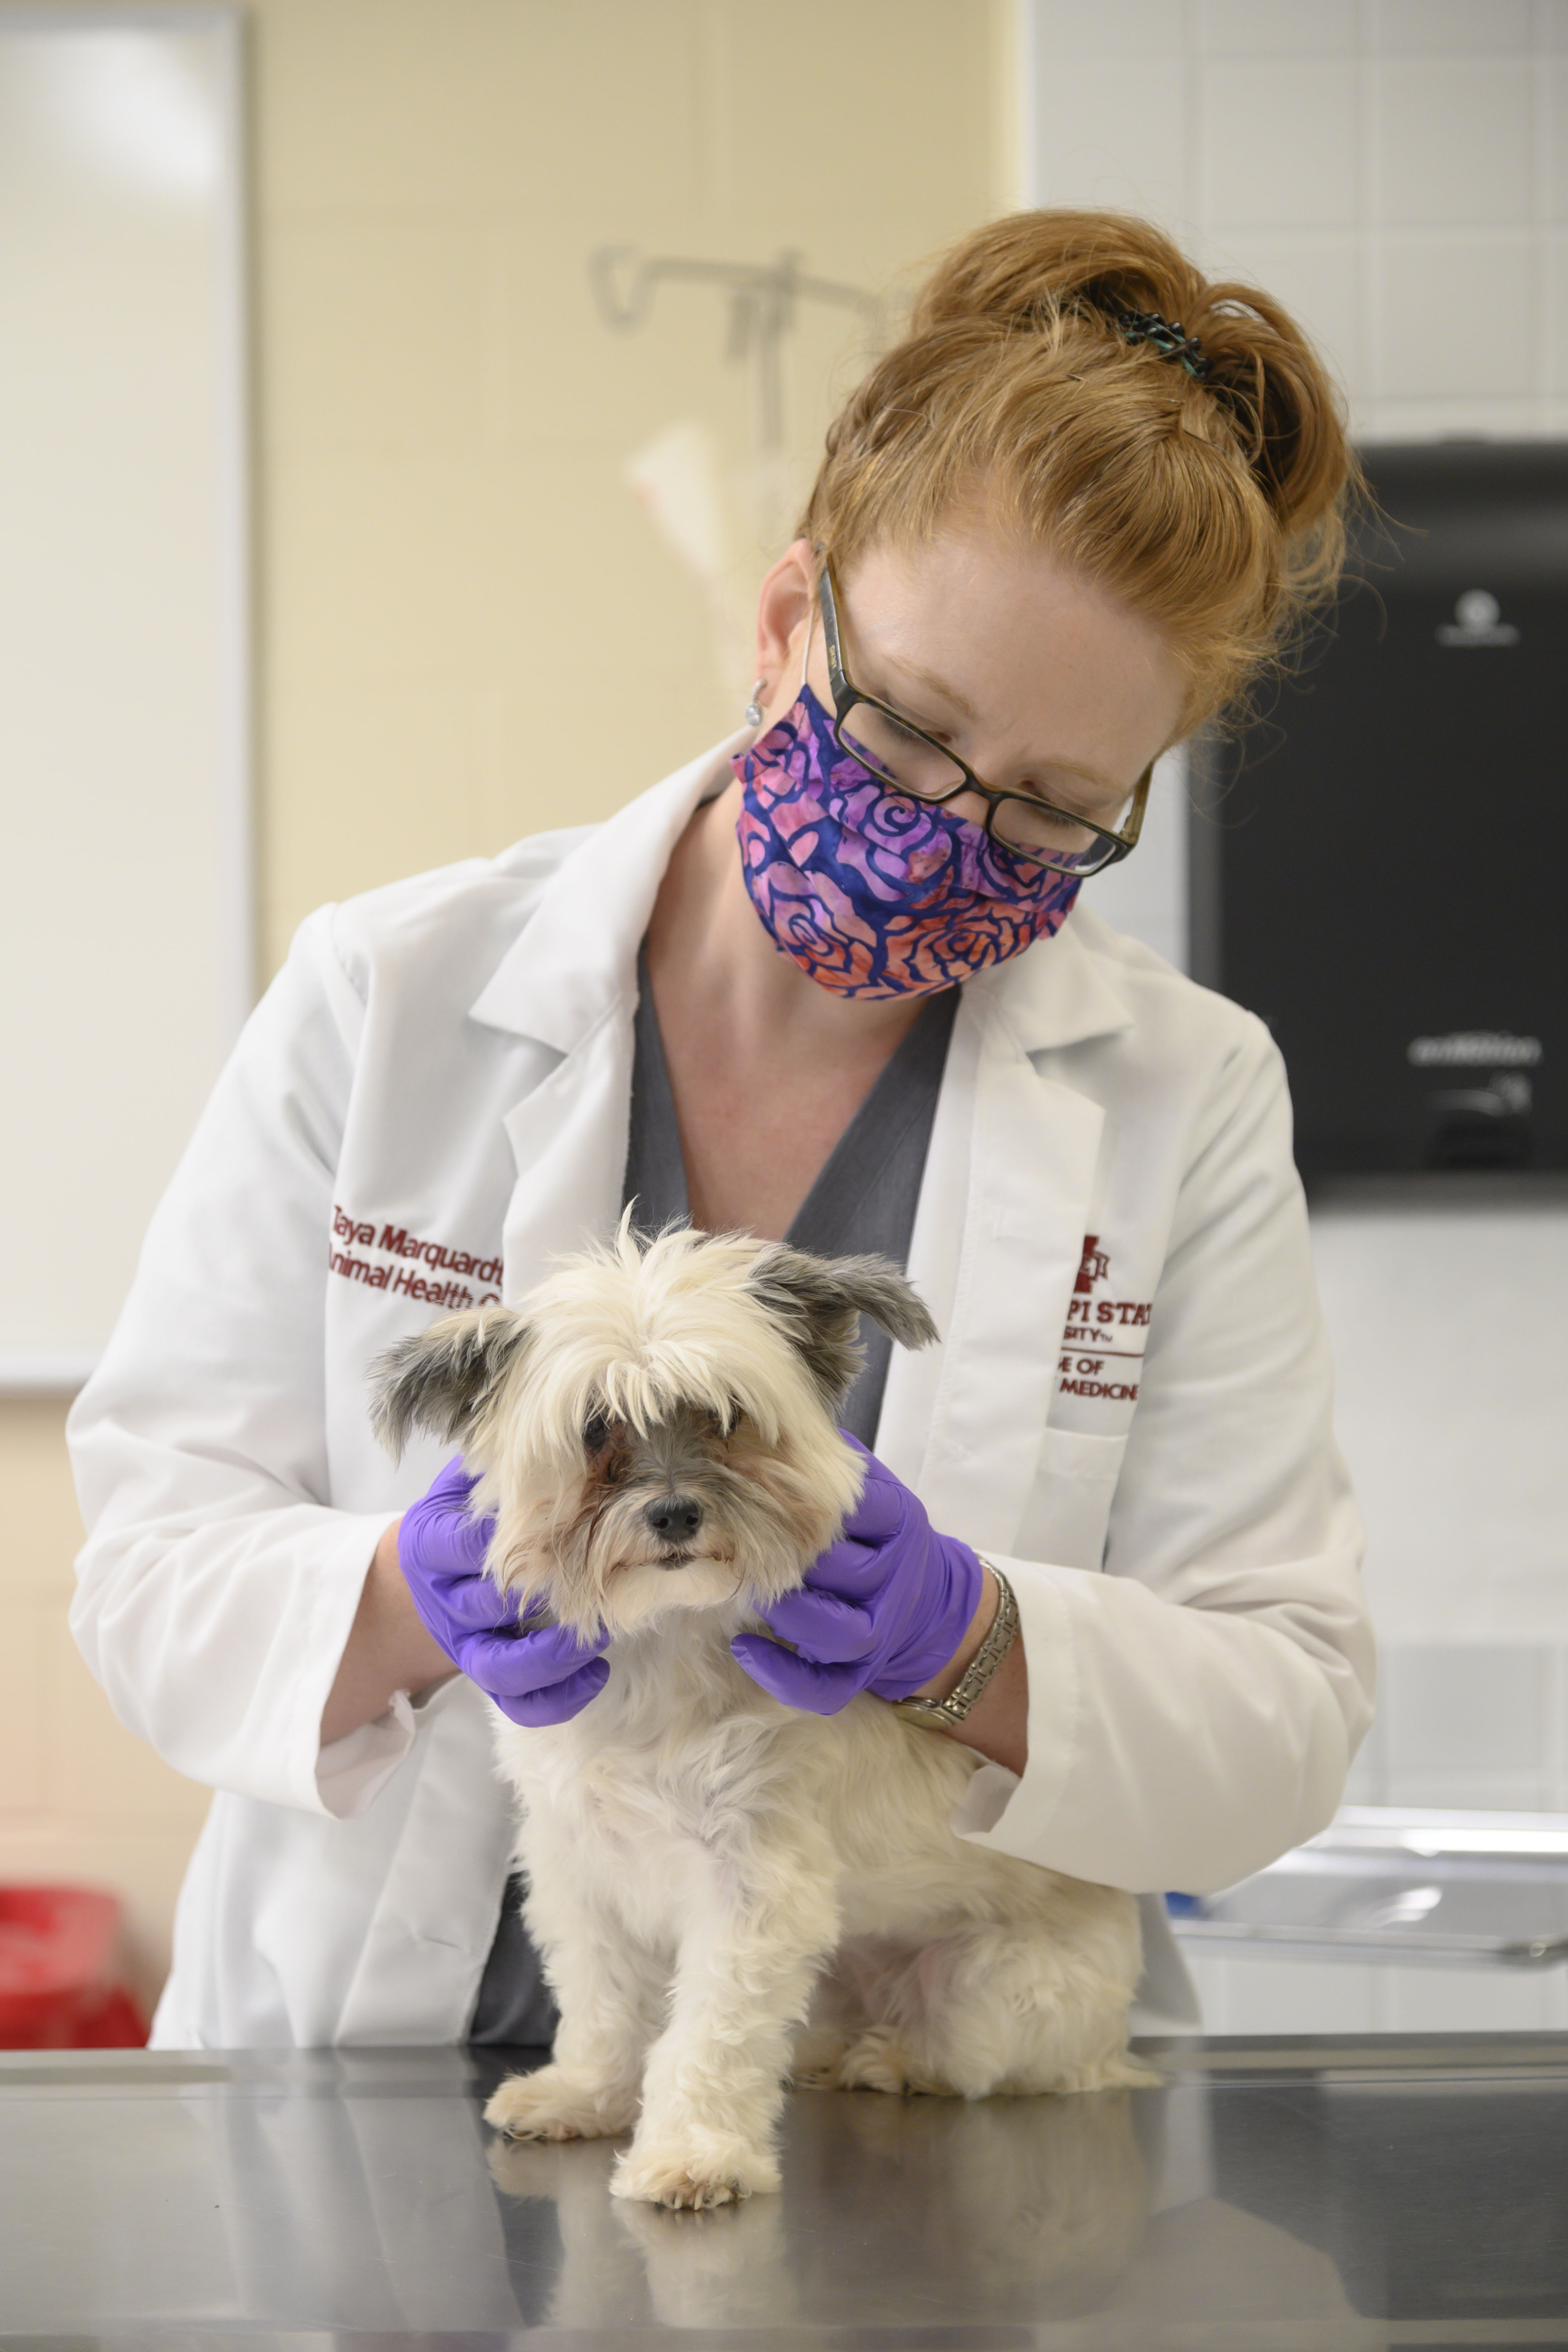 A veterinarian examines a dog